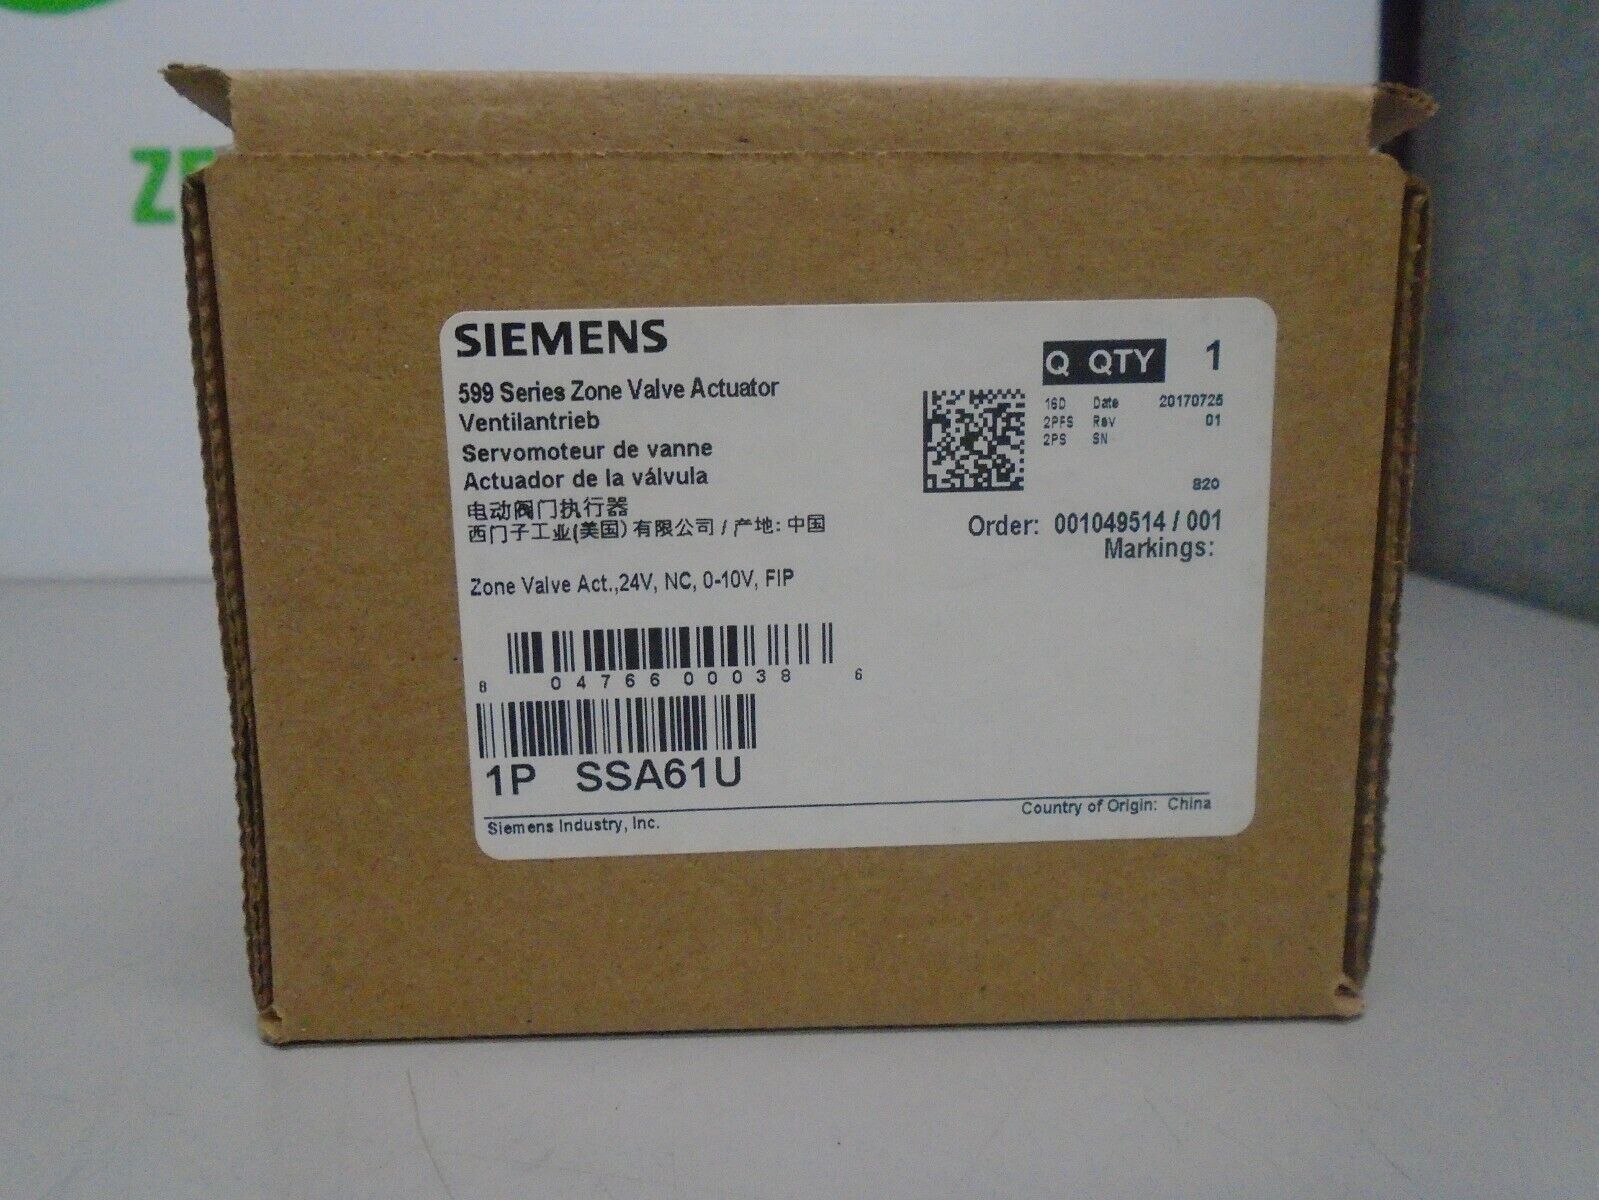 Siemens SSA61U 24V NC 0-10V FIP 599 Series Zone Valve Actuator 